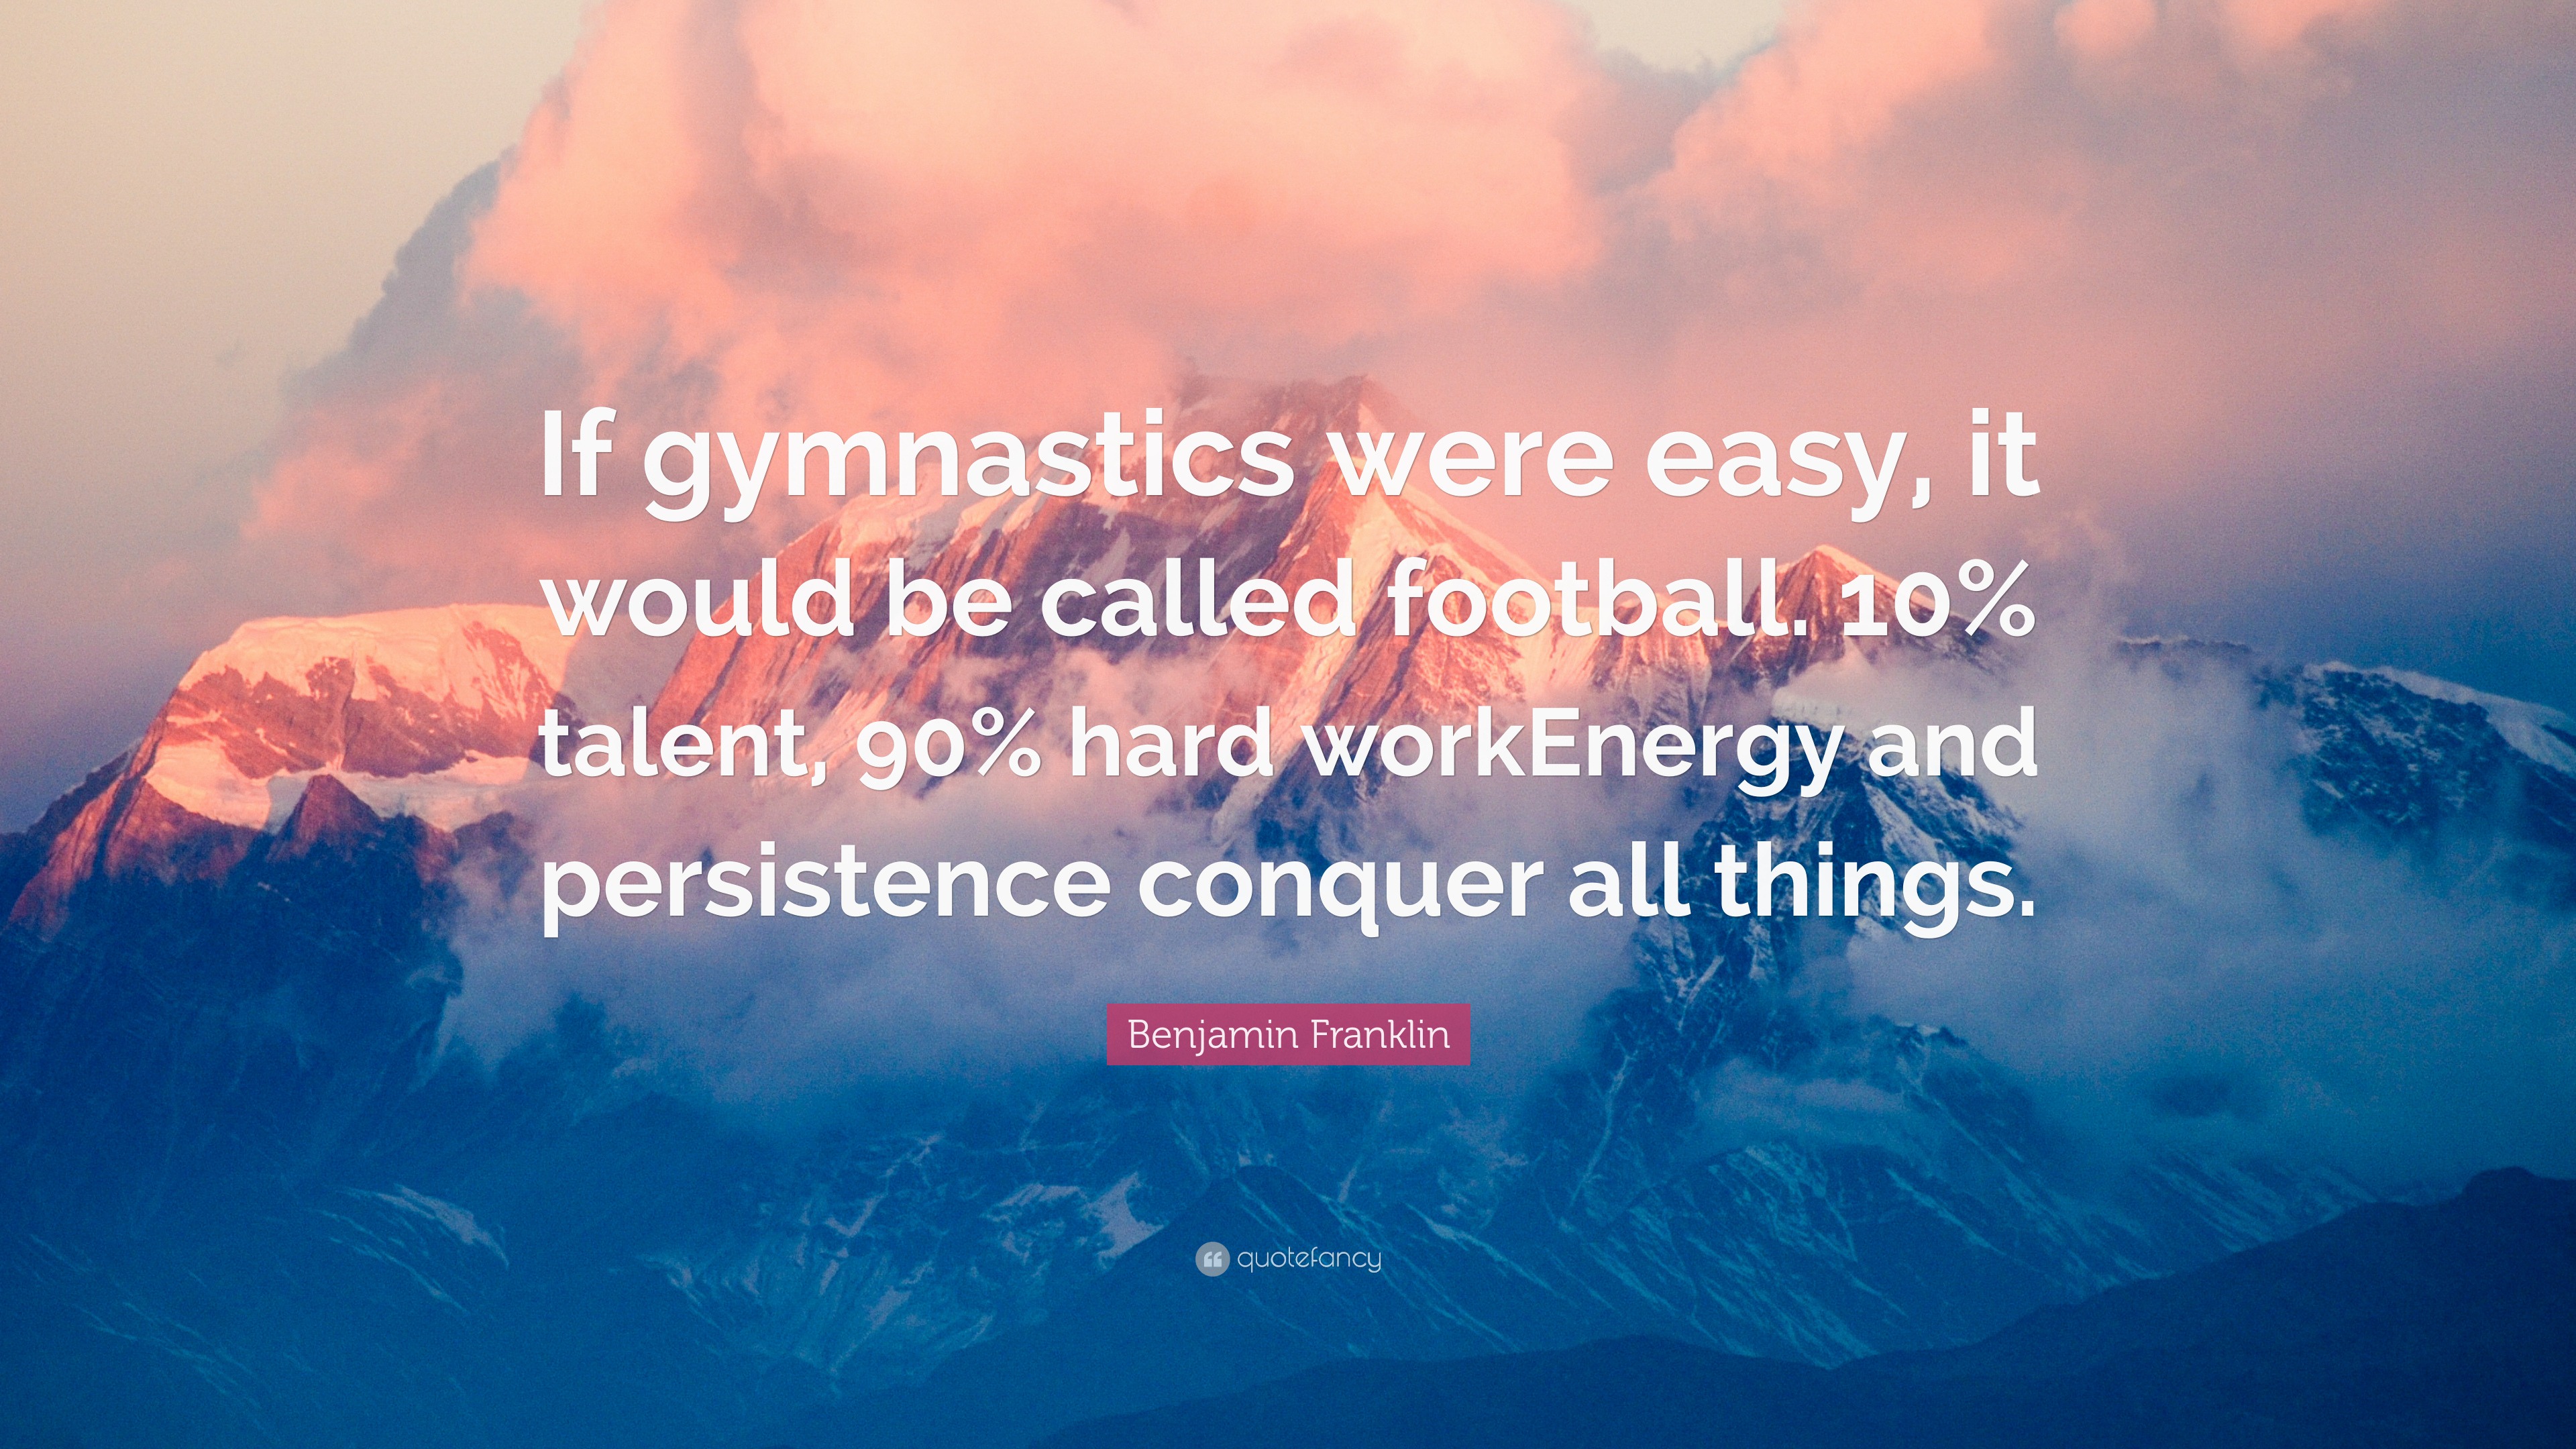 12 Gymnastics wallpaper ideas  gymnastics gymnastics quotes  inspirational gymnastics quotes